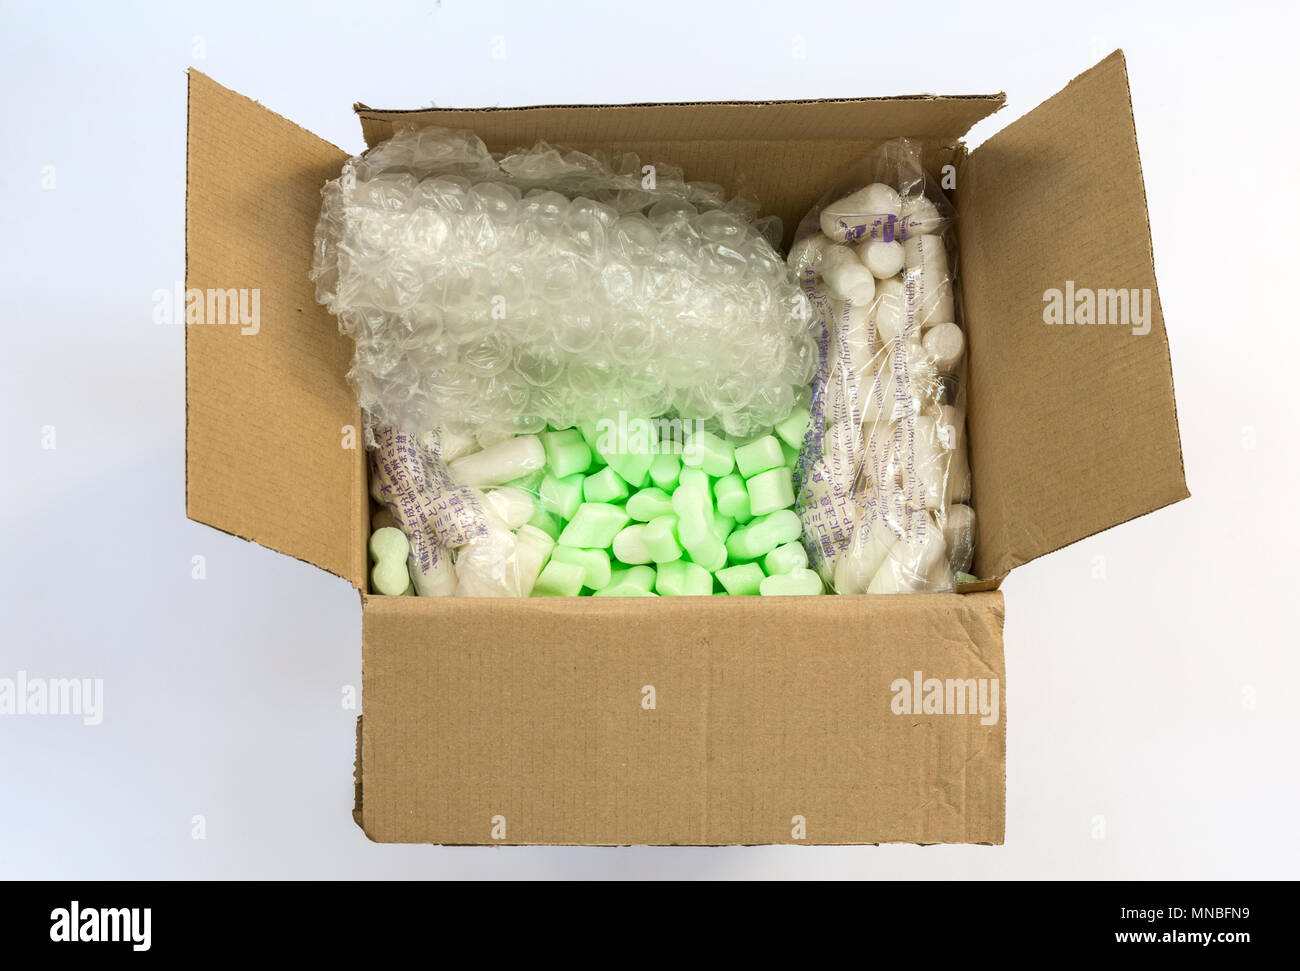 Stratocell Packaging: Polethylene Foam Inserts for Cardboard Boxes